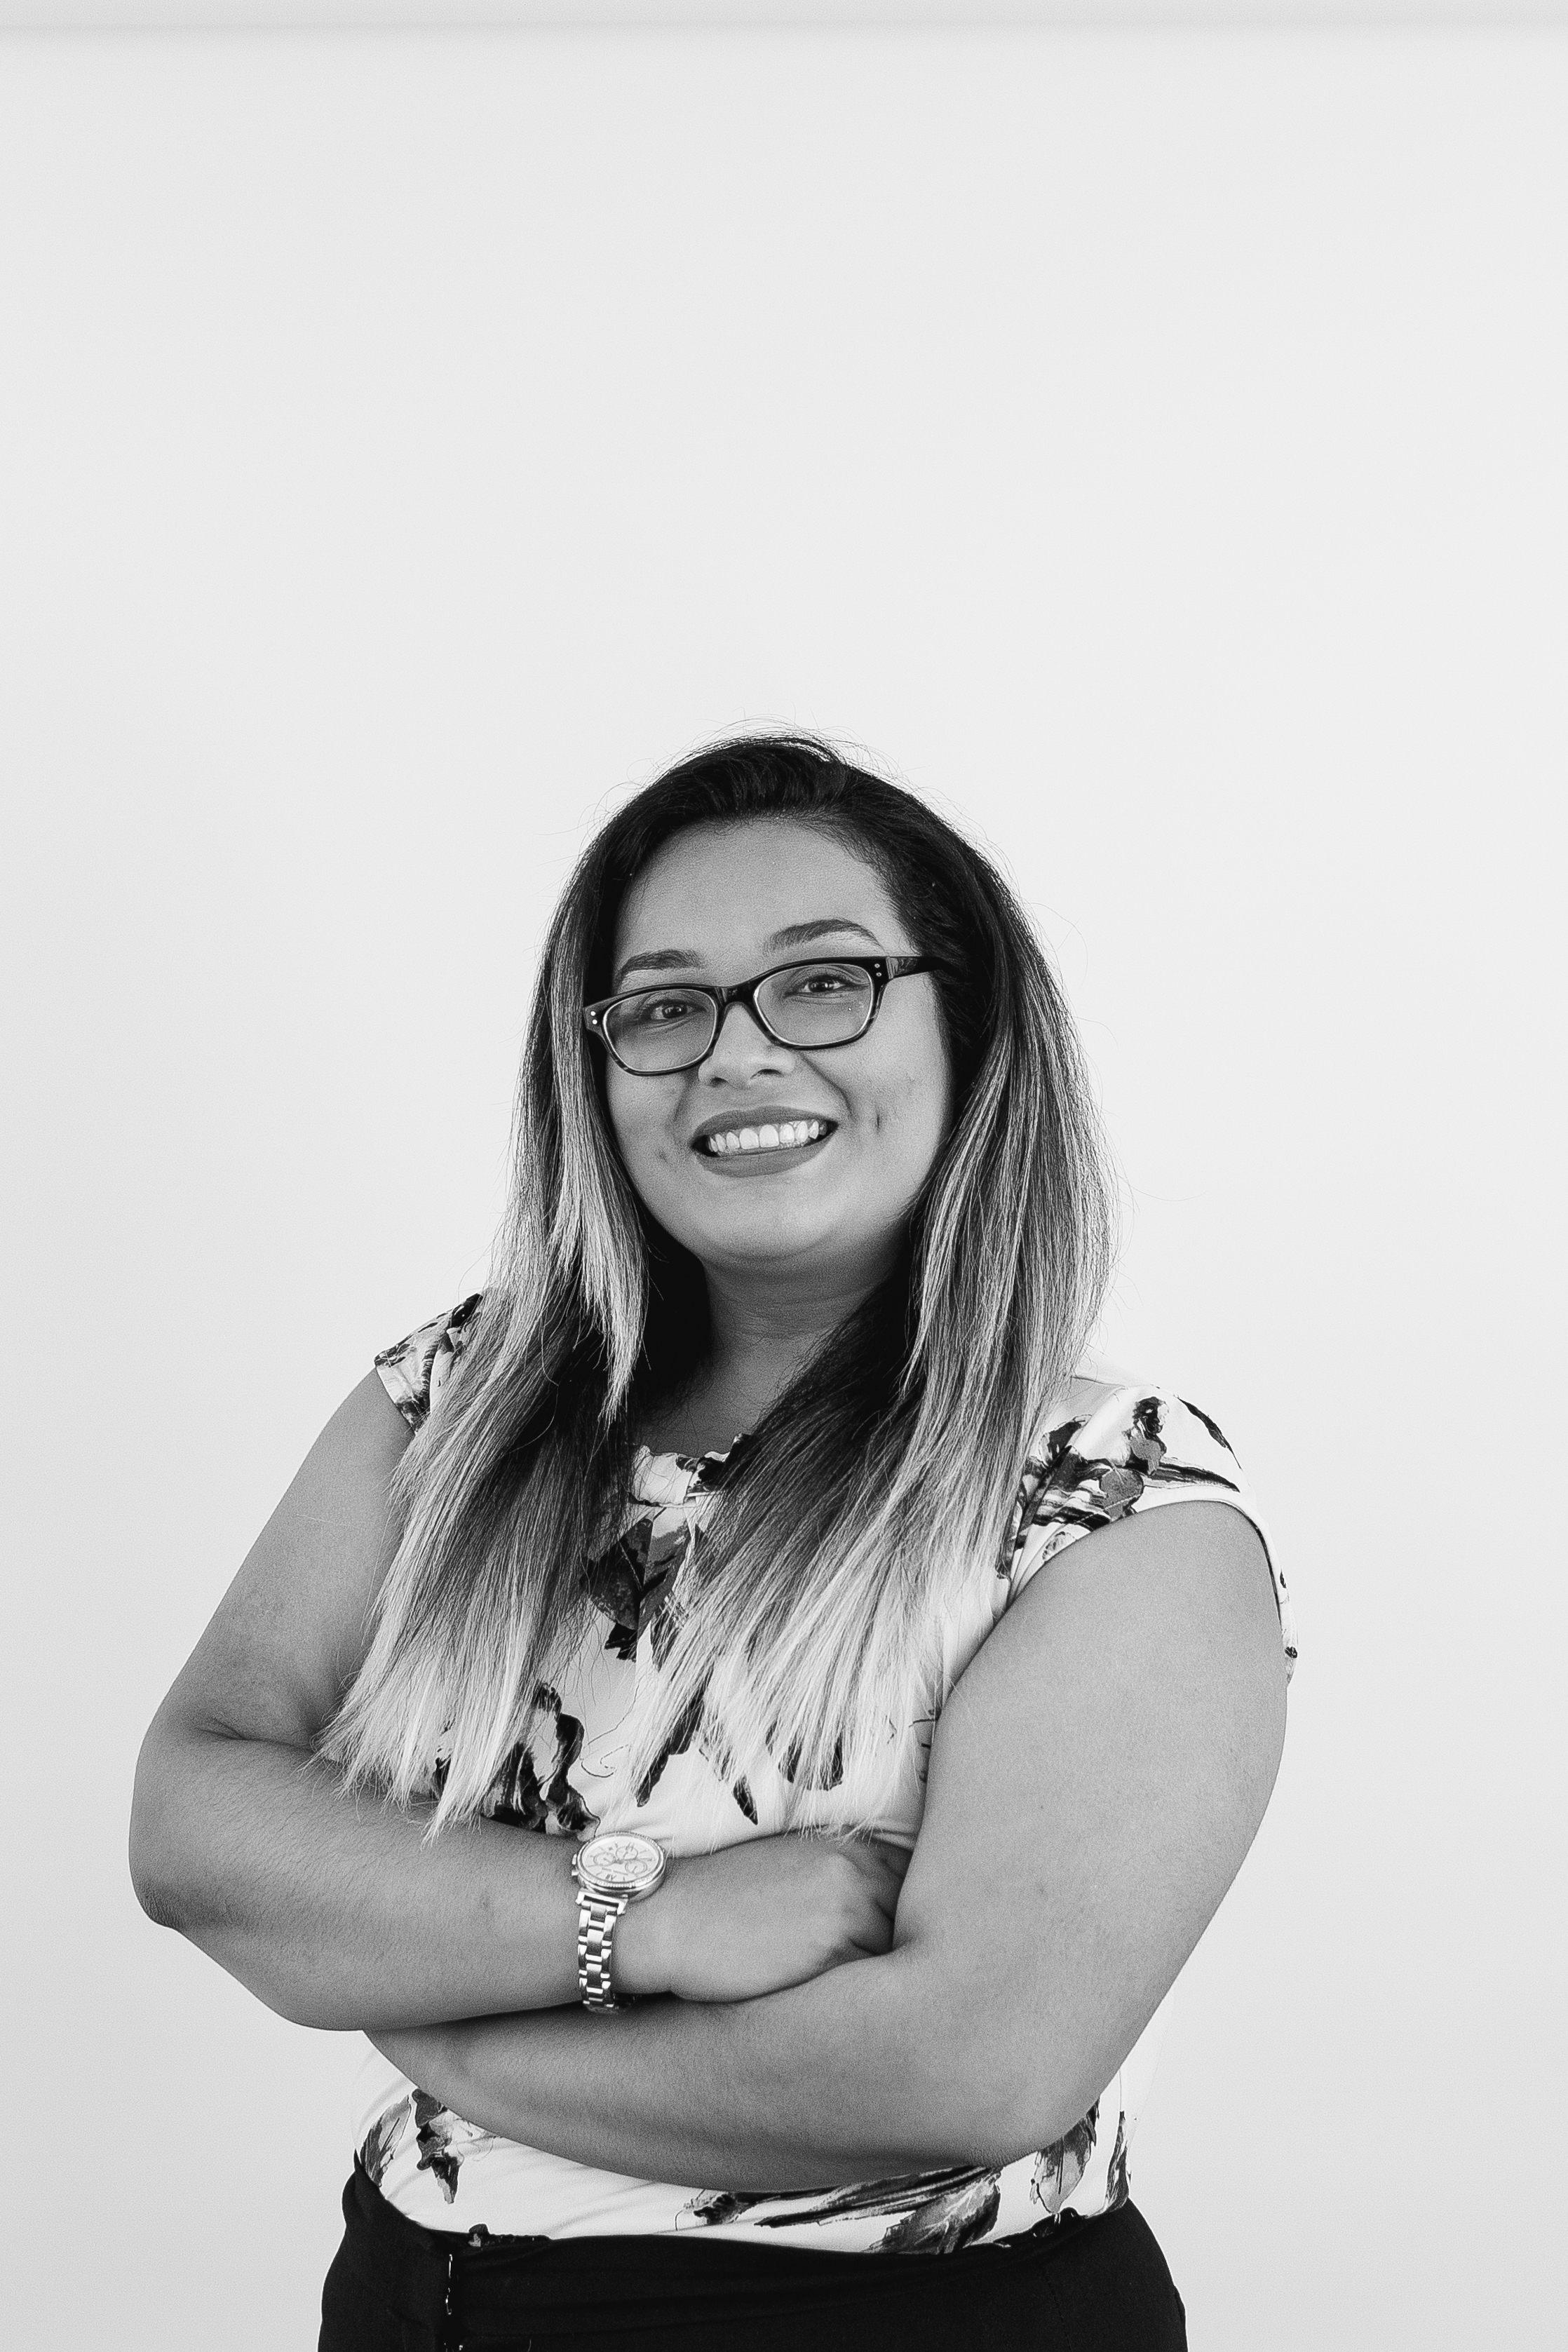 Jennifer Argueta-Contreras, undergraduate student, posing for a photo in black and white.